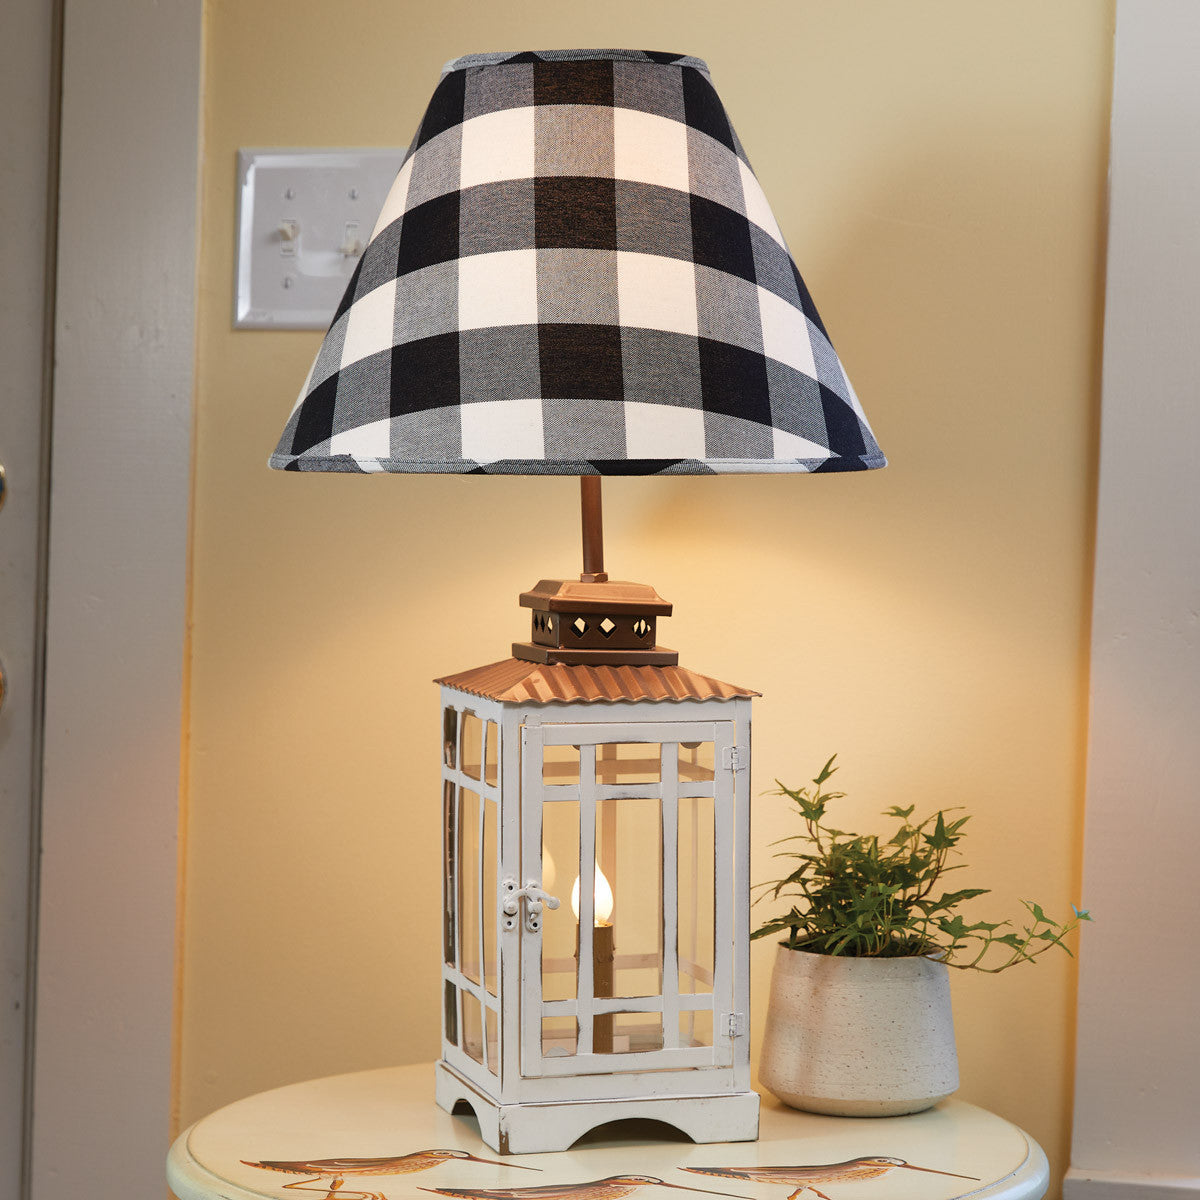 White Lantern Lamp With Night Light - Park Designs